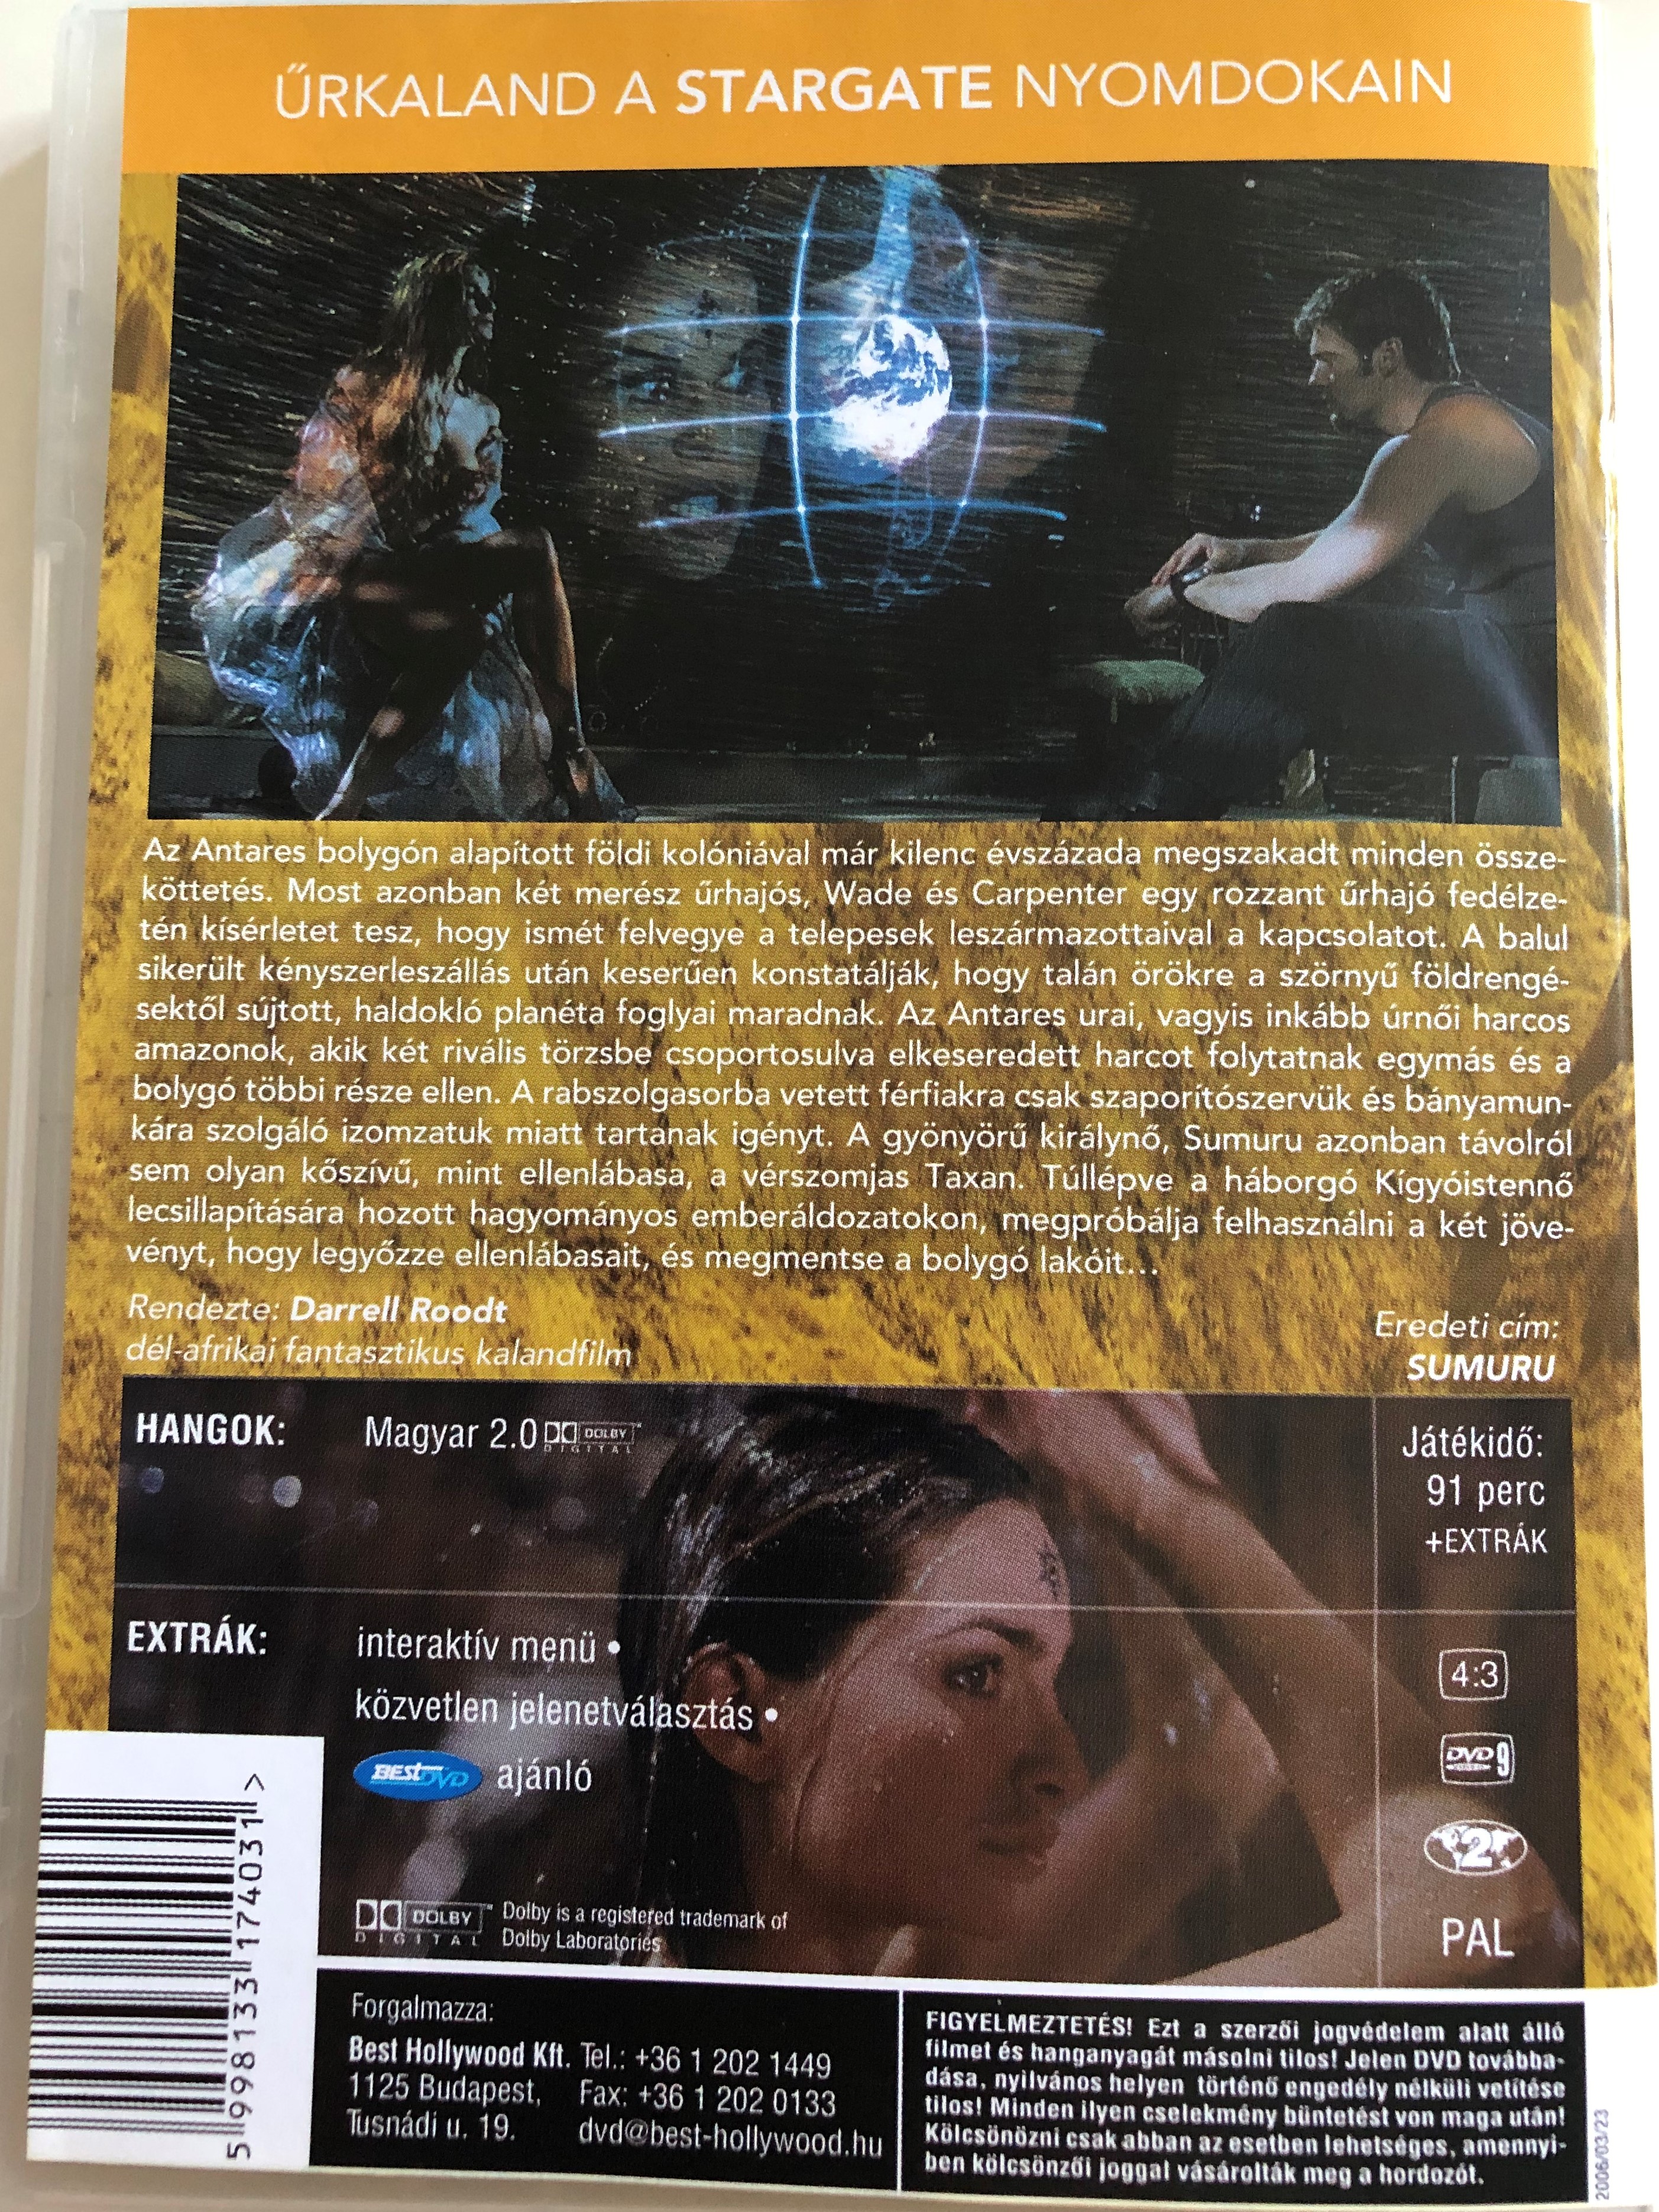 sumuru-dvd-2003-a-k-gy-istenn-bolyg-ja-directed-by-darrell-roodt-starring-alexandra-kamp-michael-shanks-written-by-sax-rohmer-2-.jpg